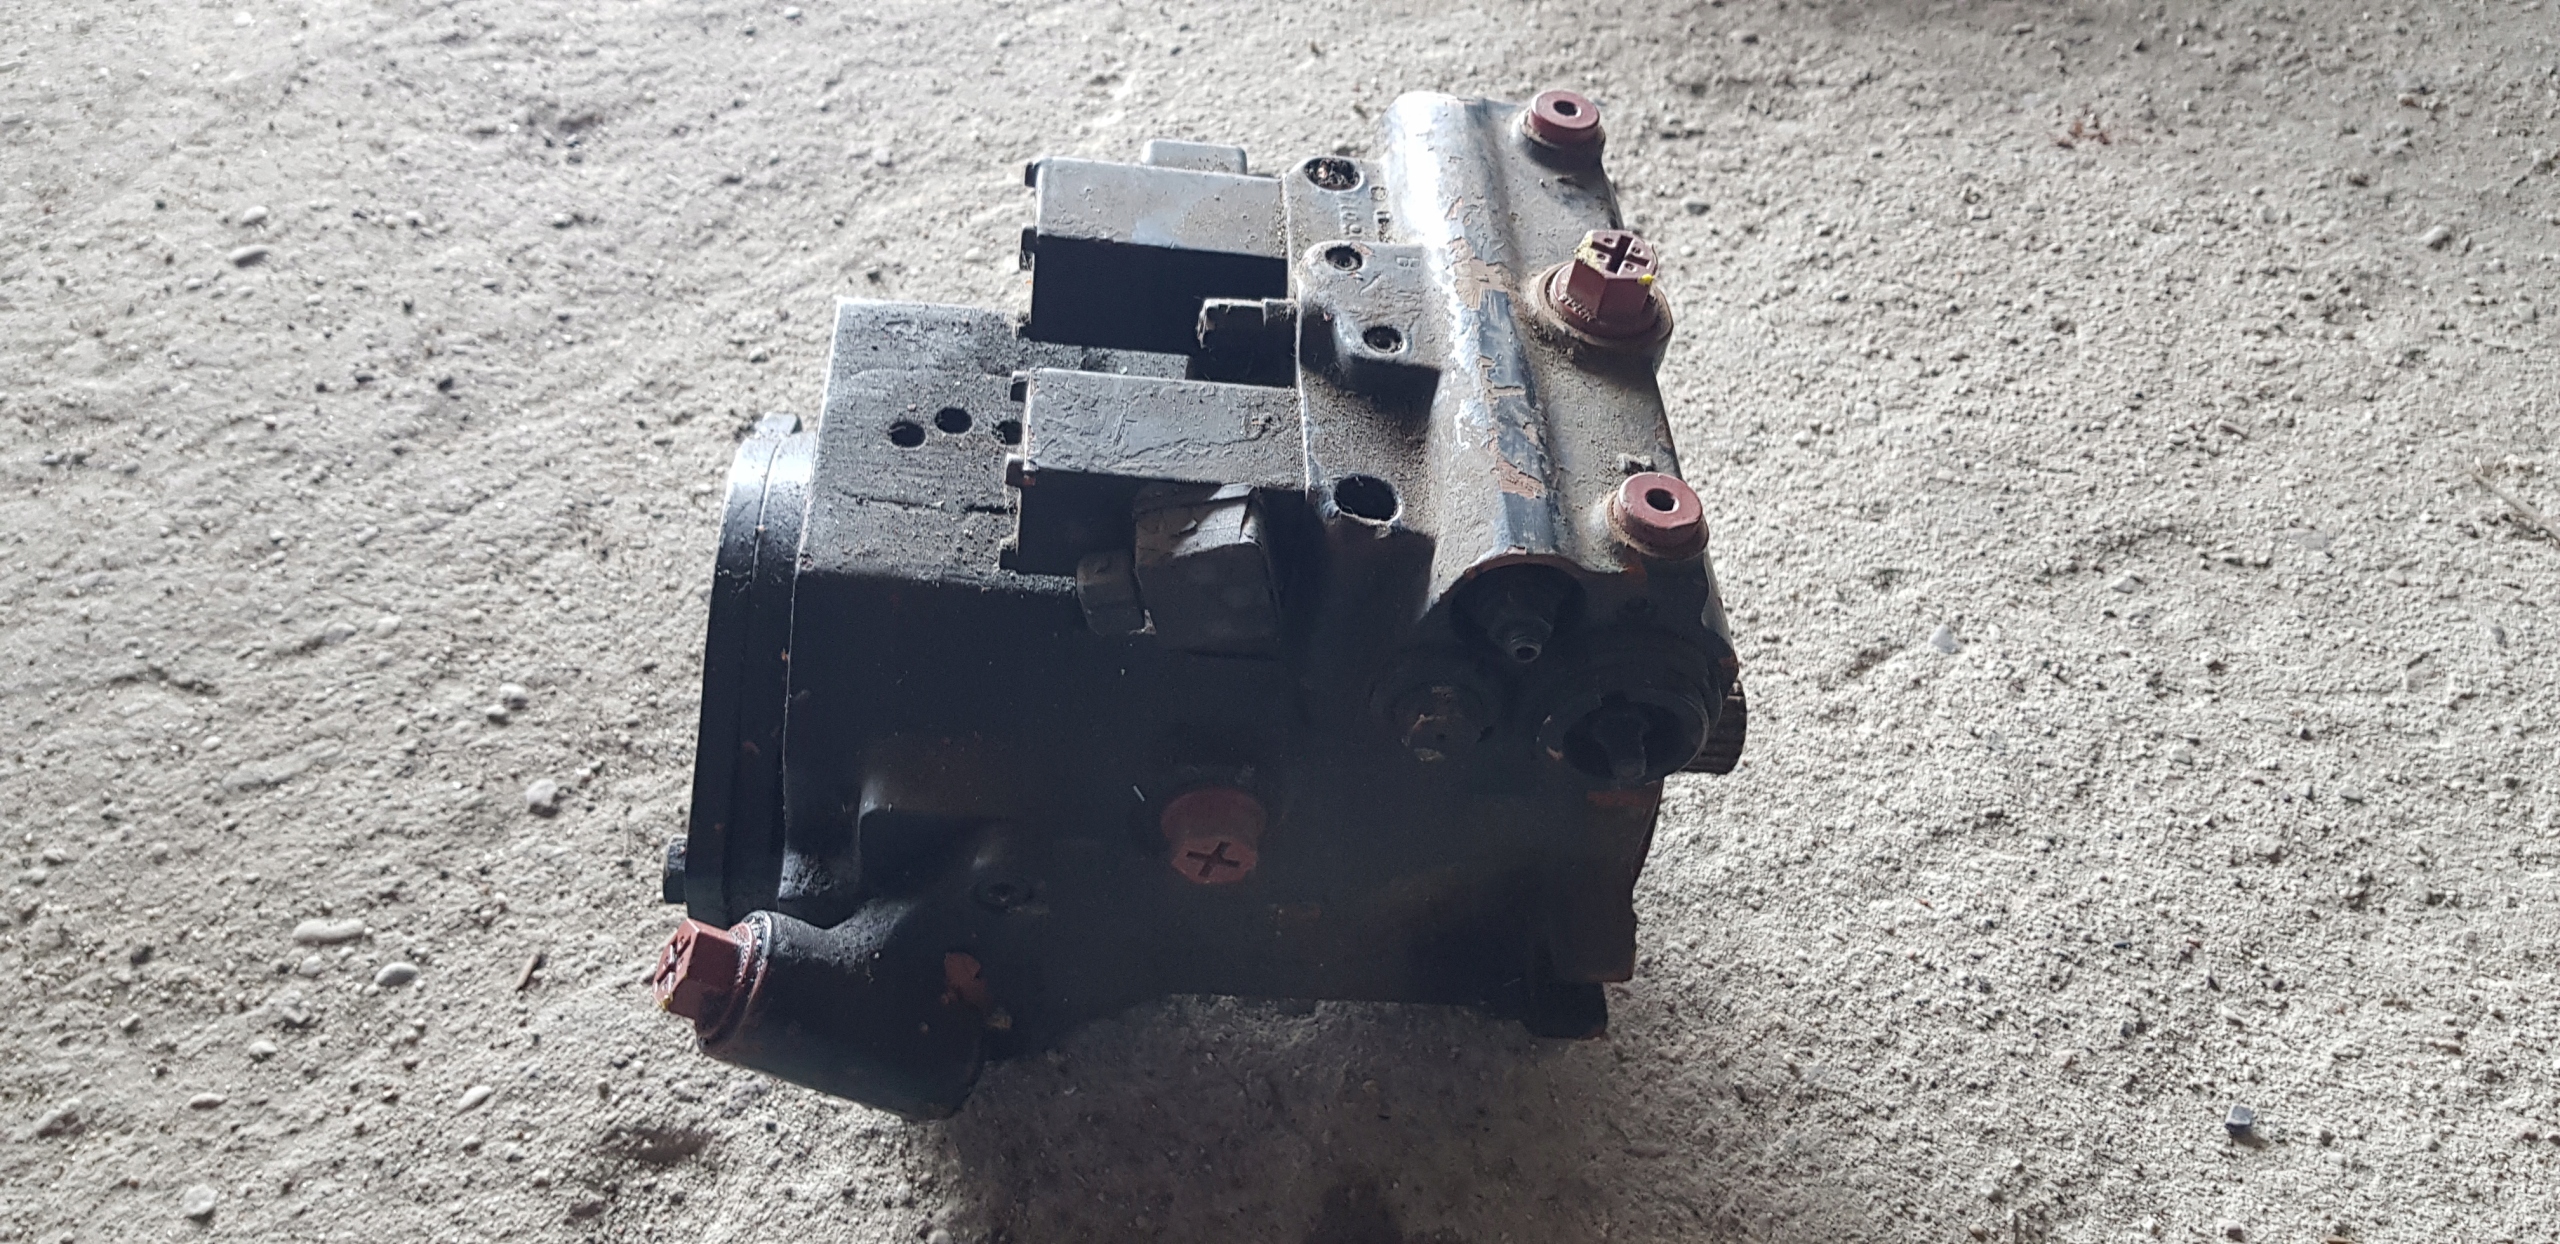 pompa hydrauliczna linde hpv55-02a 2500